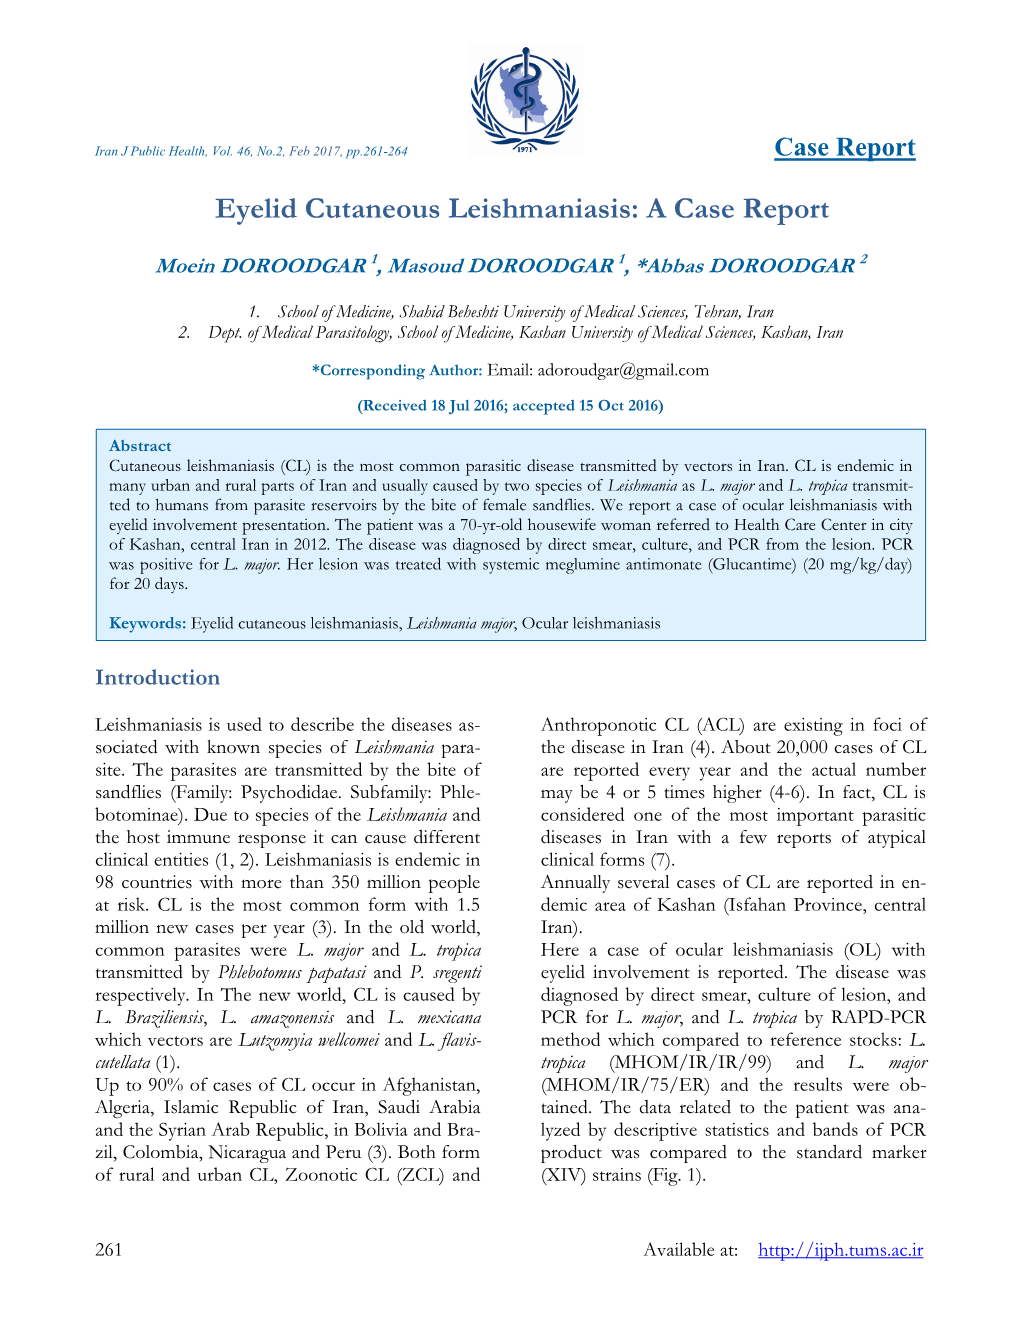 Eyelid Cutaneous Leishmaniasis: a Case Report